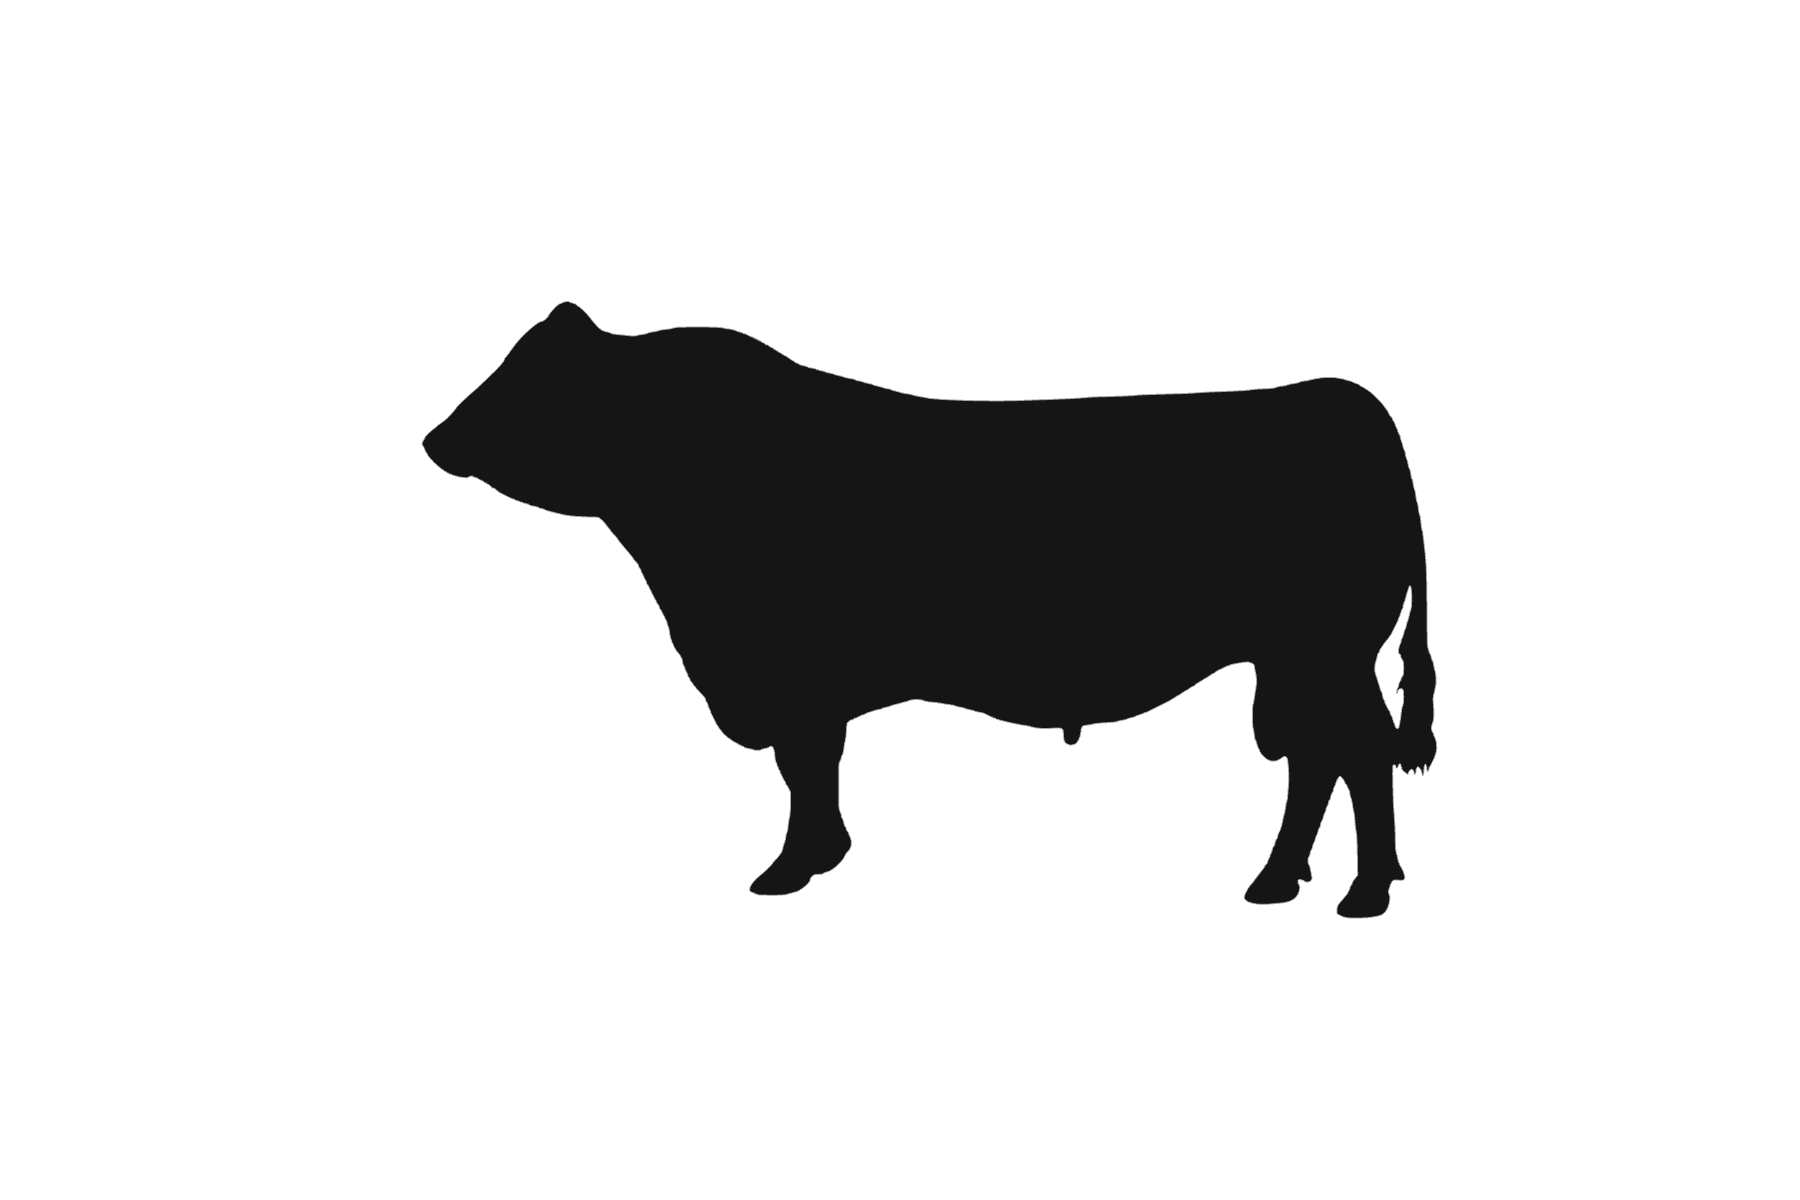 bull silhouette